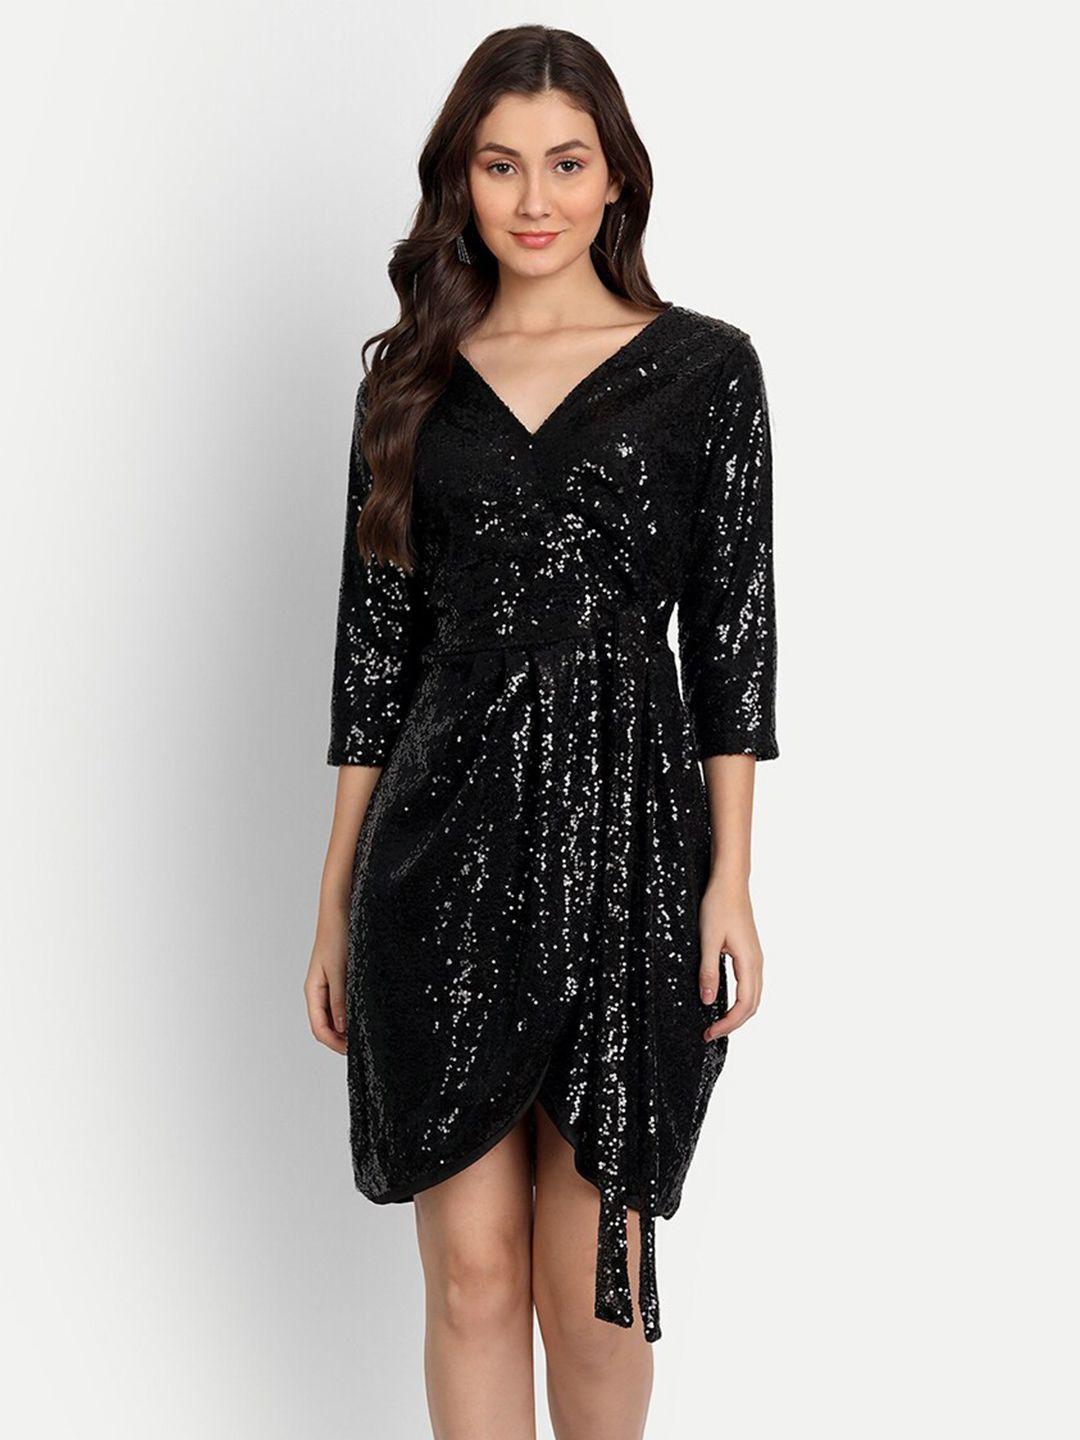 iki chic black embellished net dress